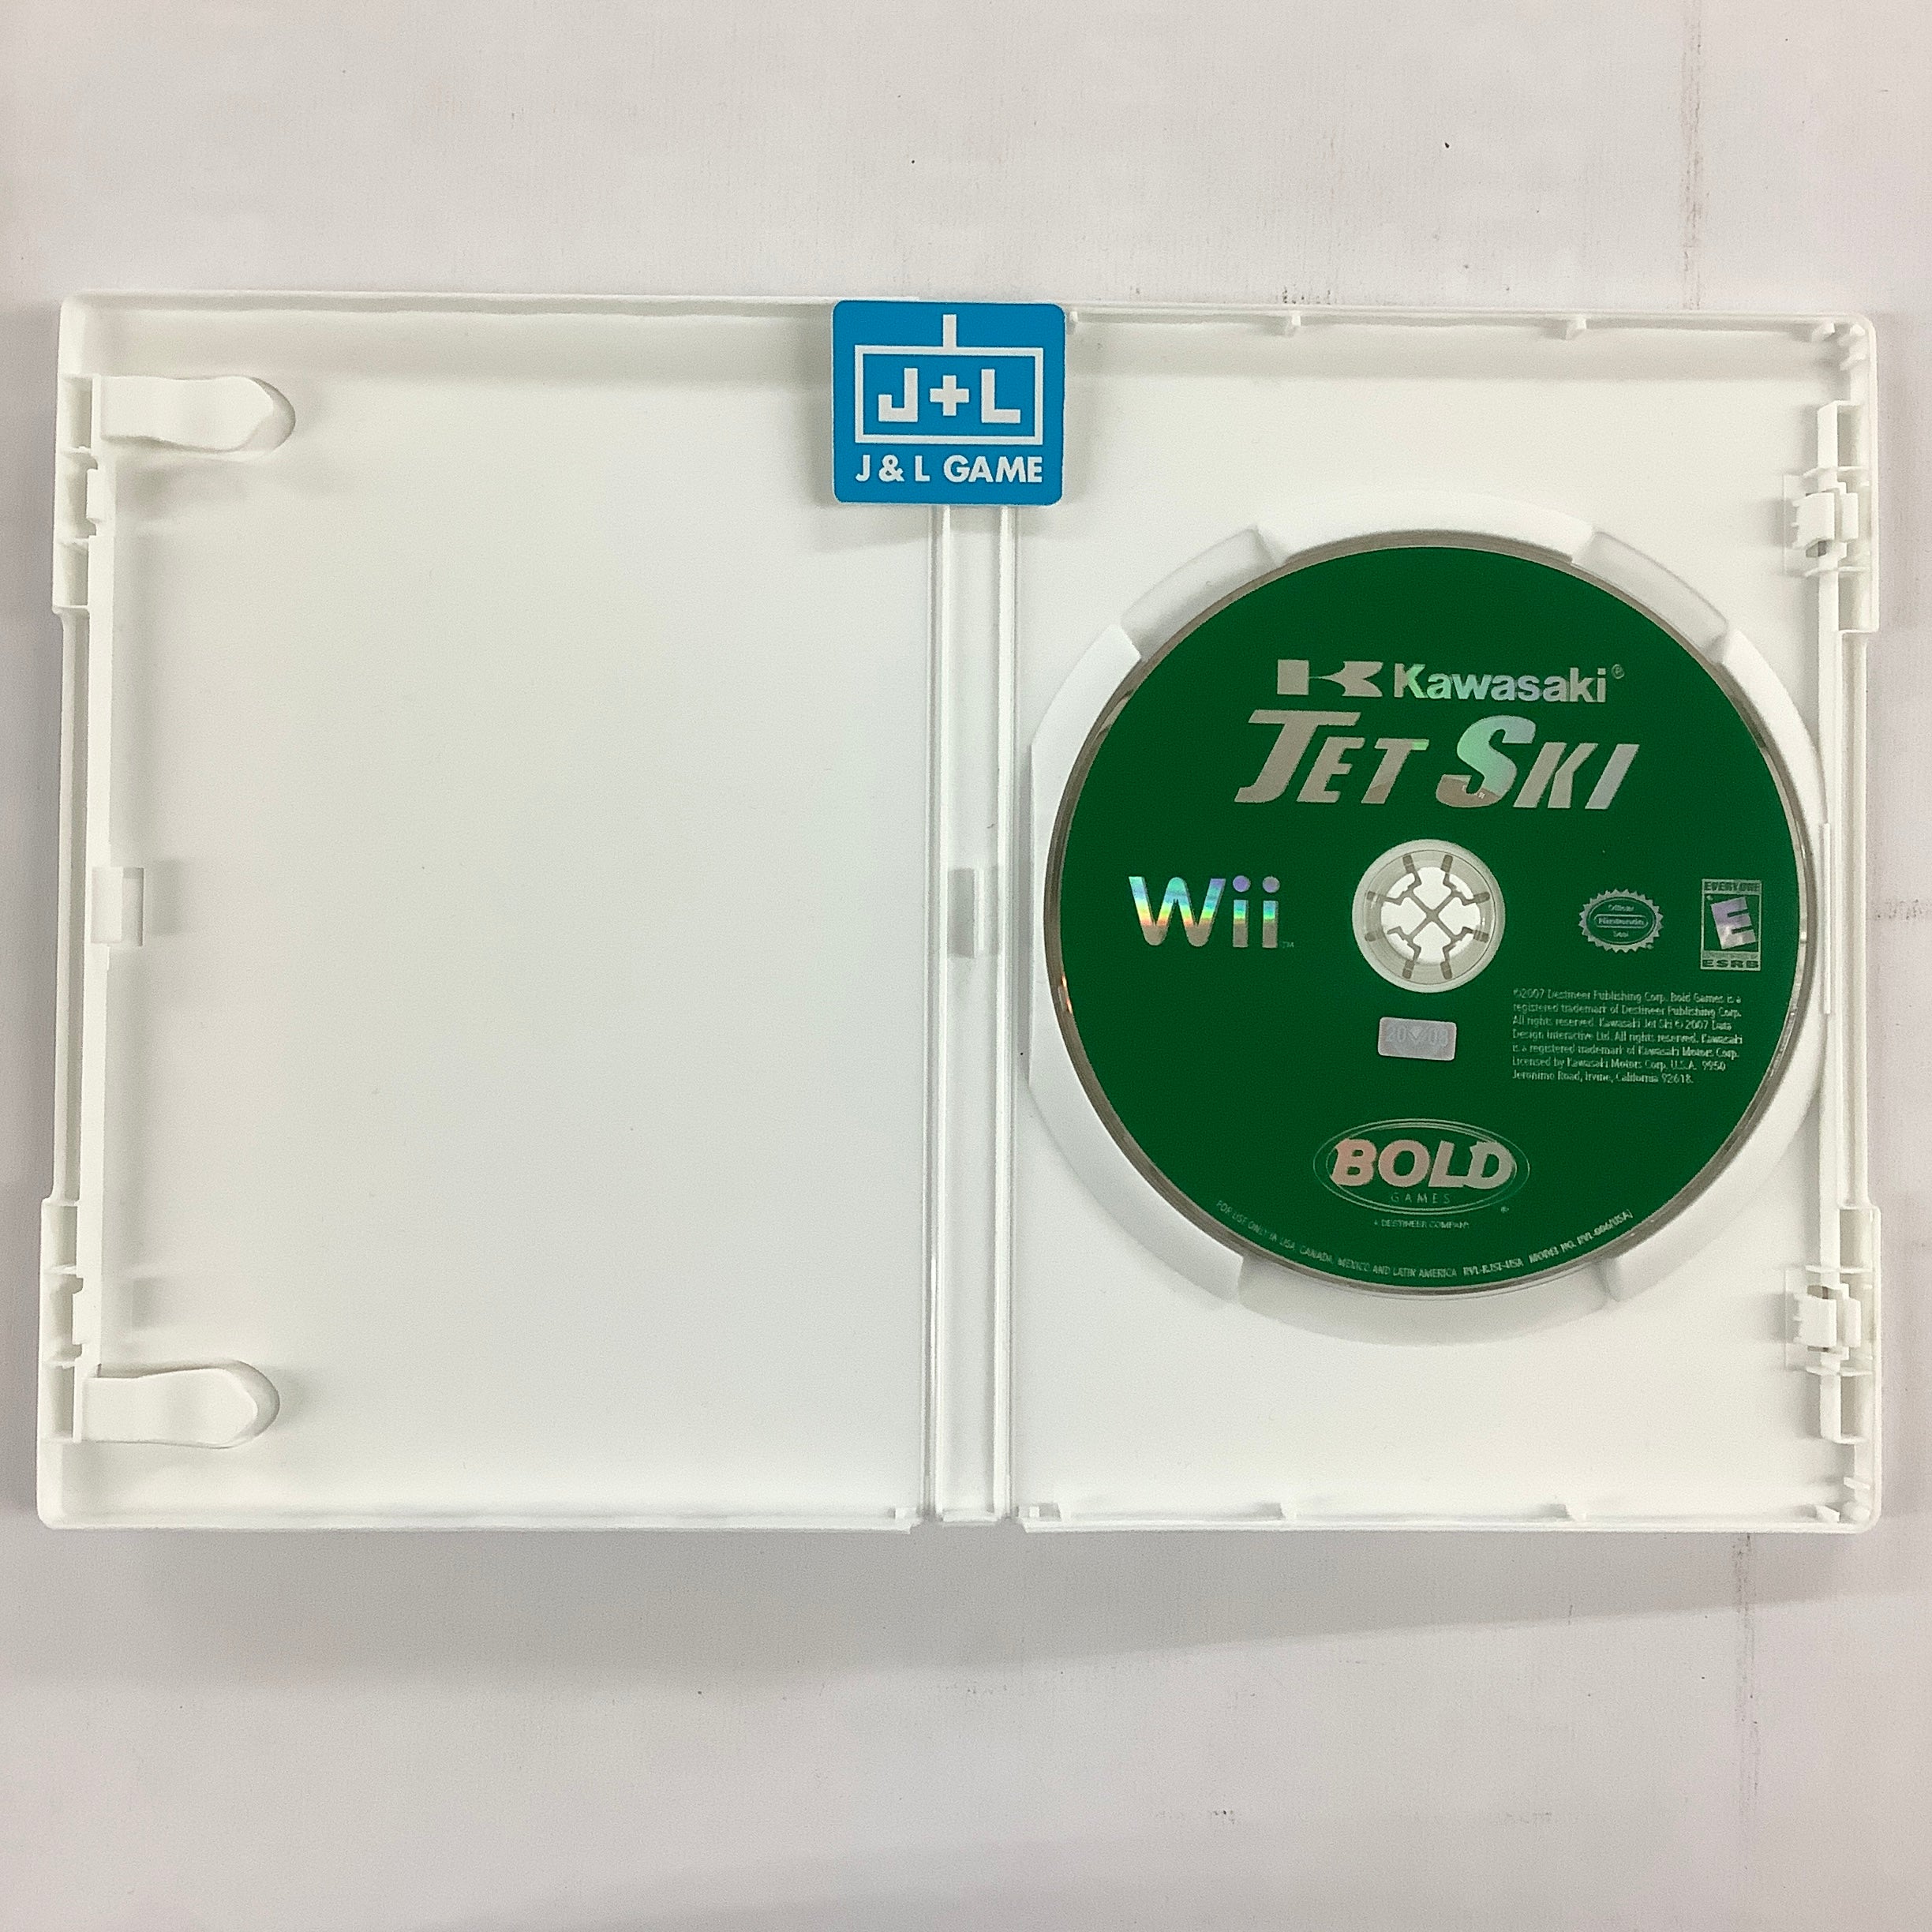 Kawasaki Jet Ski - Nintendo Wii [Pre-Owned] Video Games Bold Games   